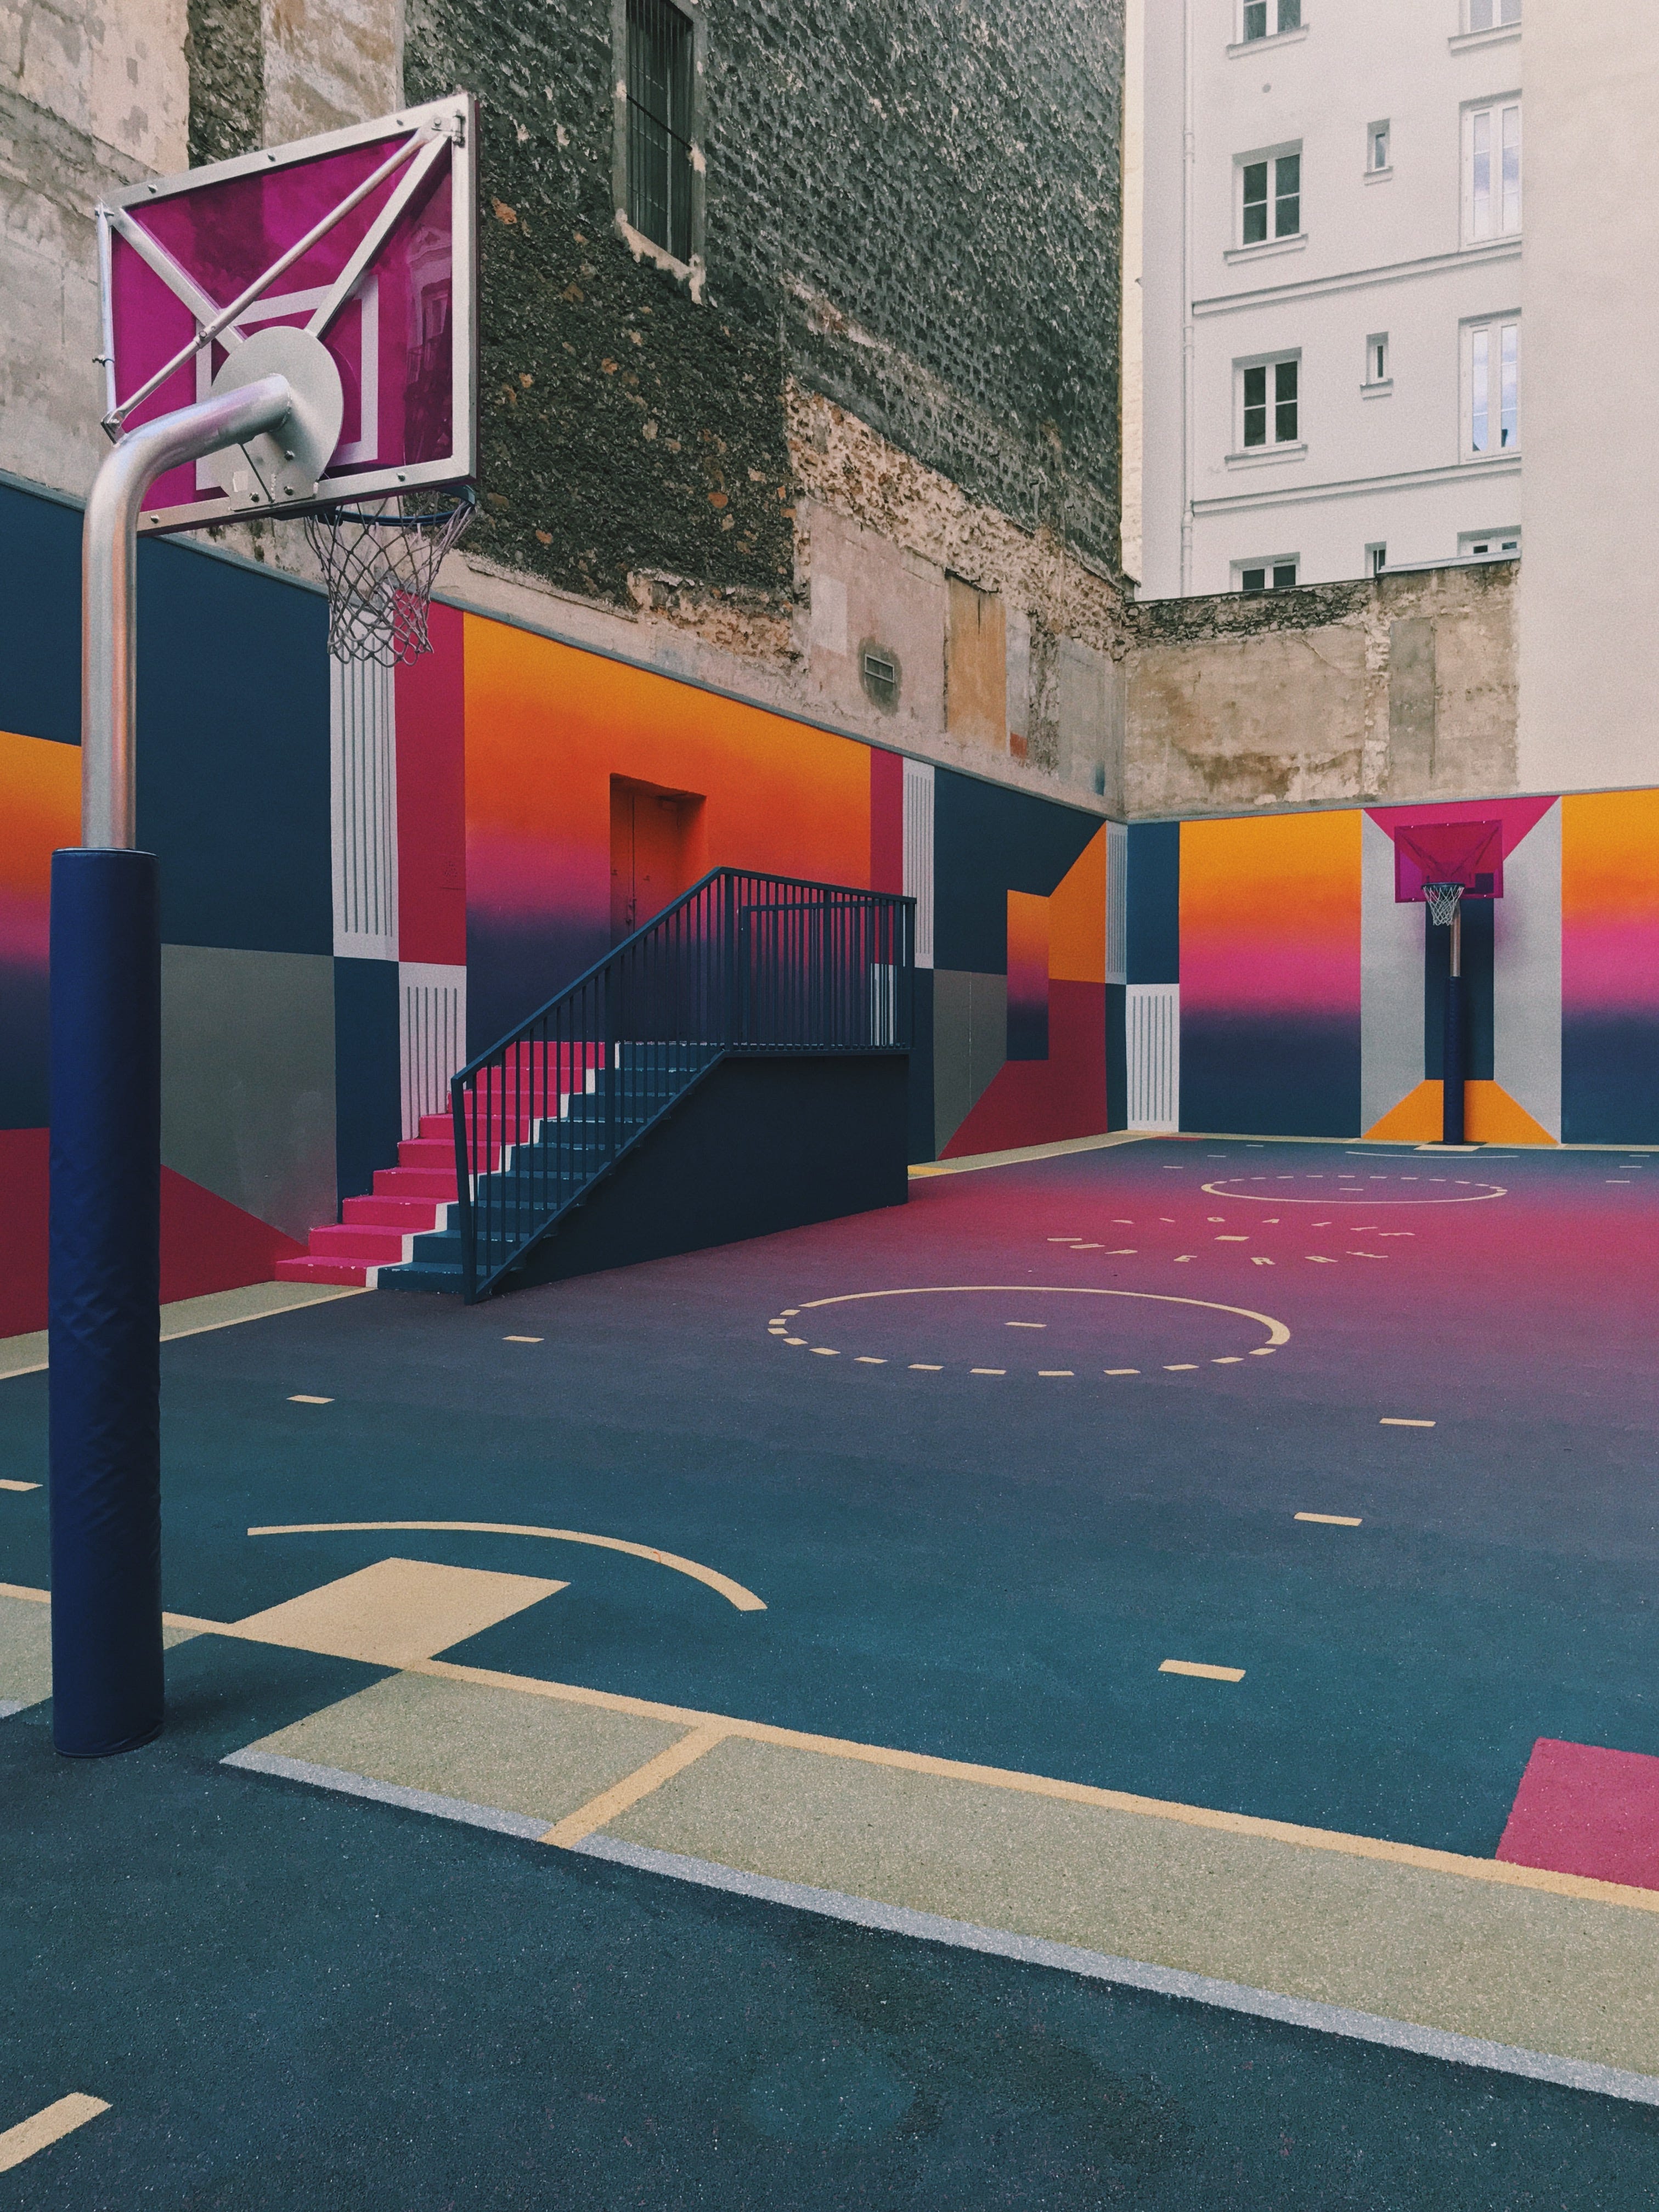 “Urban basketball court with colorful graffiti on walls and floor, Сен Жорж, Париж, Иль-де-Франс, Франция” by <a href="https://unsplash.com/@kalimullin?utm_source=medium&amp;utm_medium=referral">Ilnur Kalimullin</a> on <a href="https://unsplash.com?utm_source=medium&amp;utm_medium=referral">Unsplash</a>